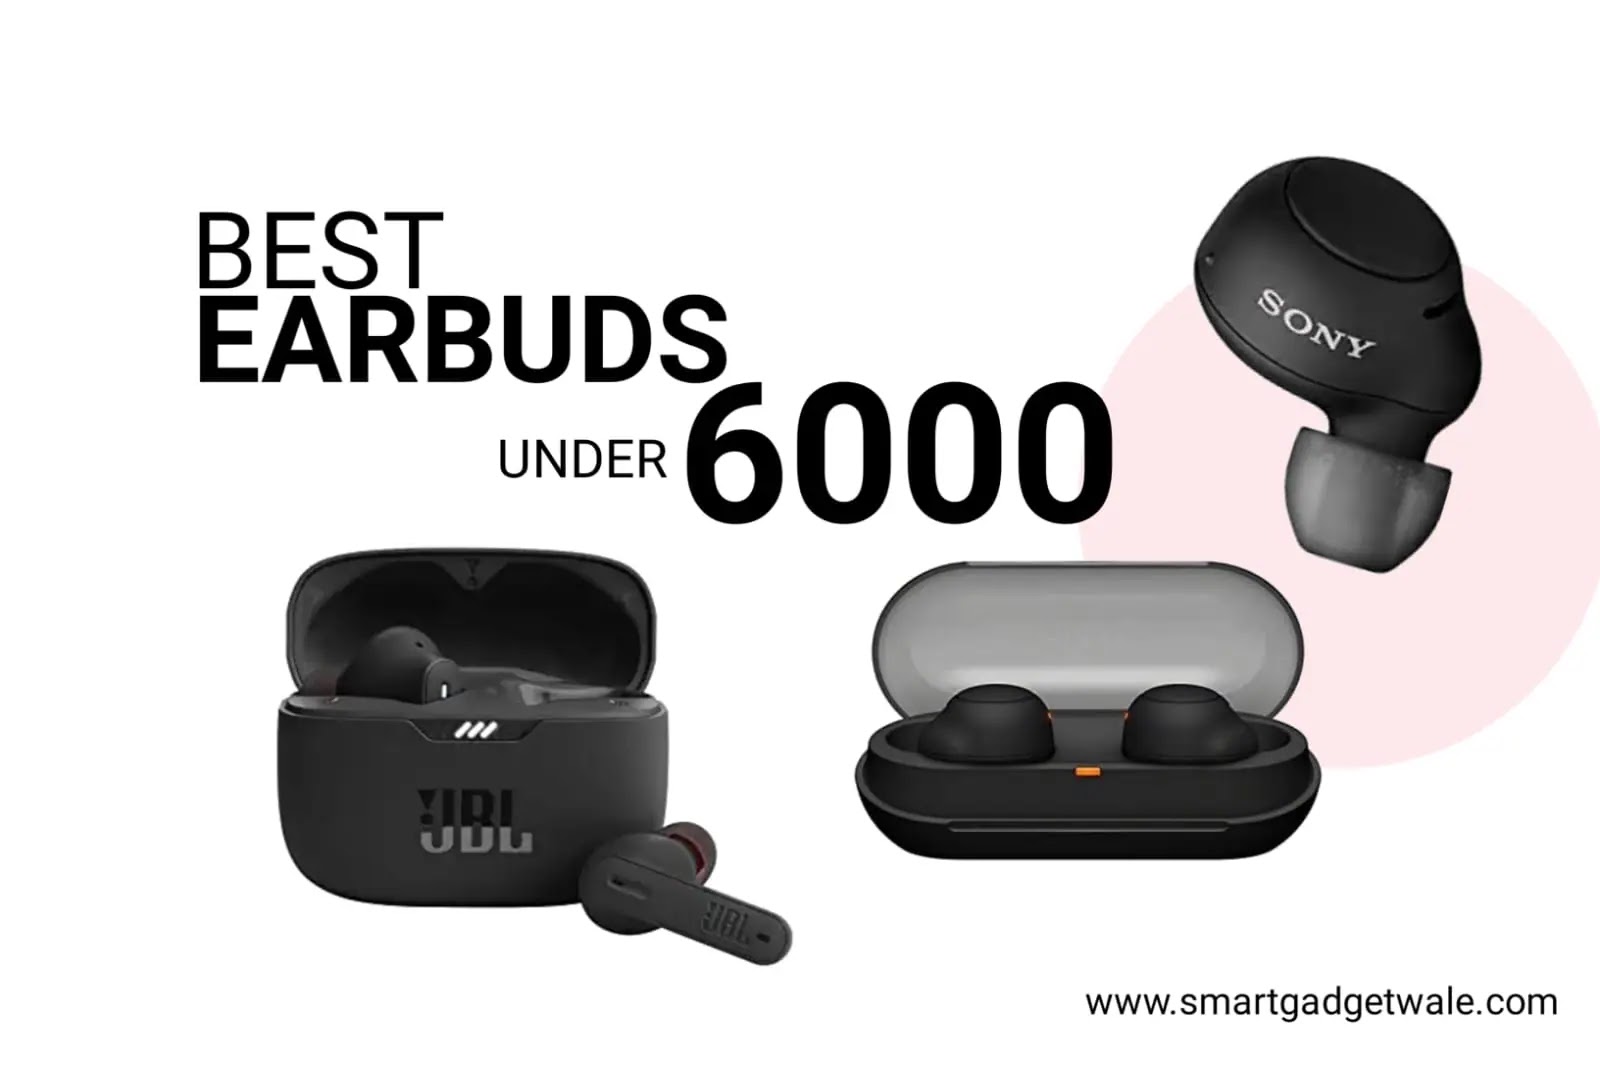 Top 10 Best True Wireless Earbuds Under 6000 in India 2022Top 10 Best True Wireless Earbuds Under 6000 in India 2022Top 10 Best True Wireless Earbuds Under 6000 in India 2022